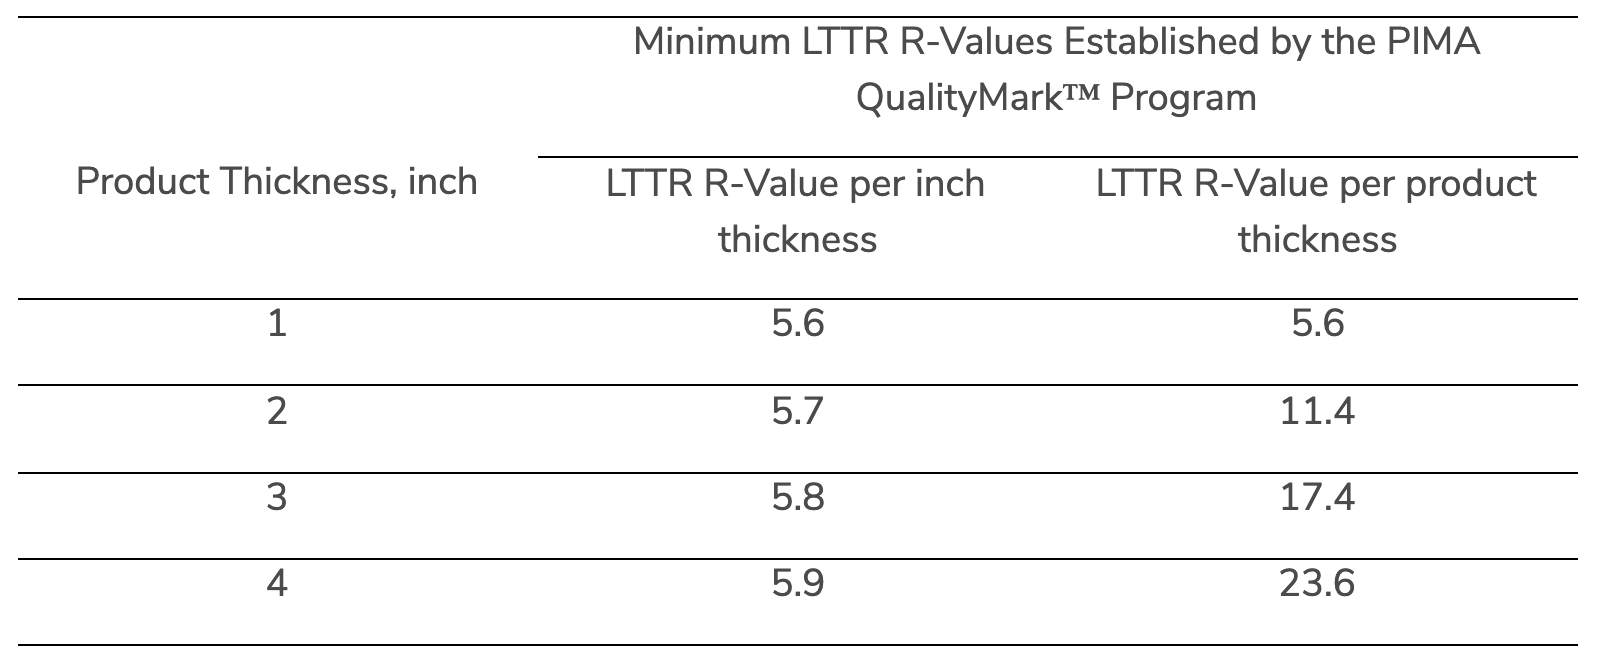 Minimum LTTR R-Values Established by the PIMA QualityMark™ Program